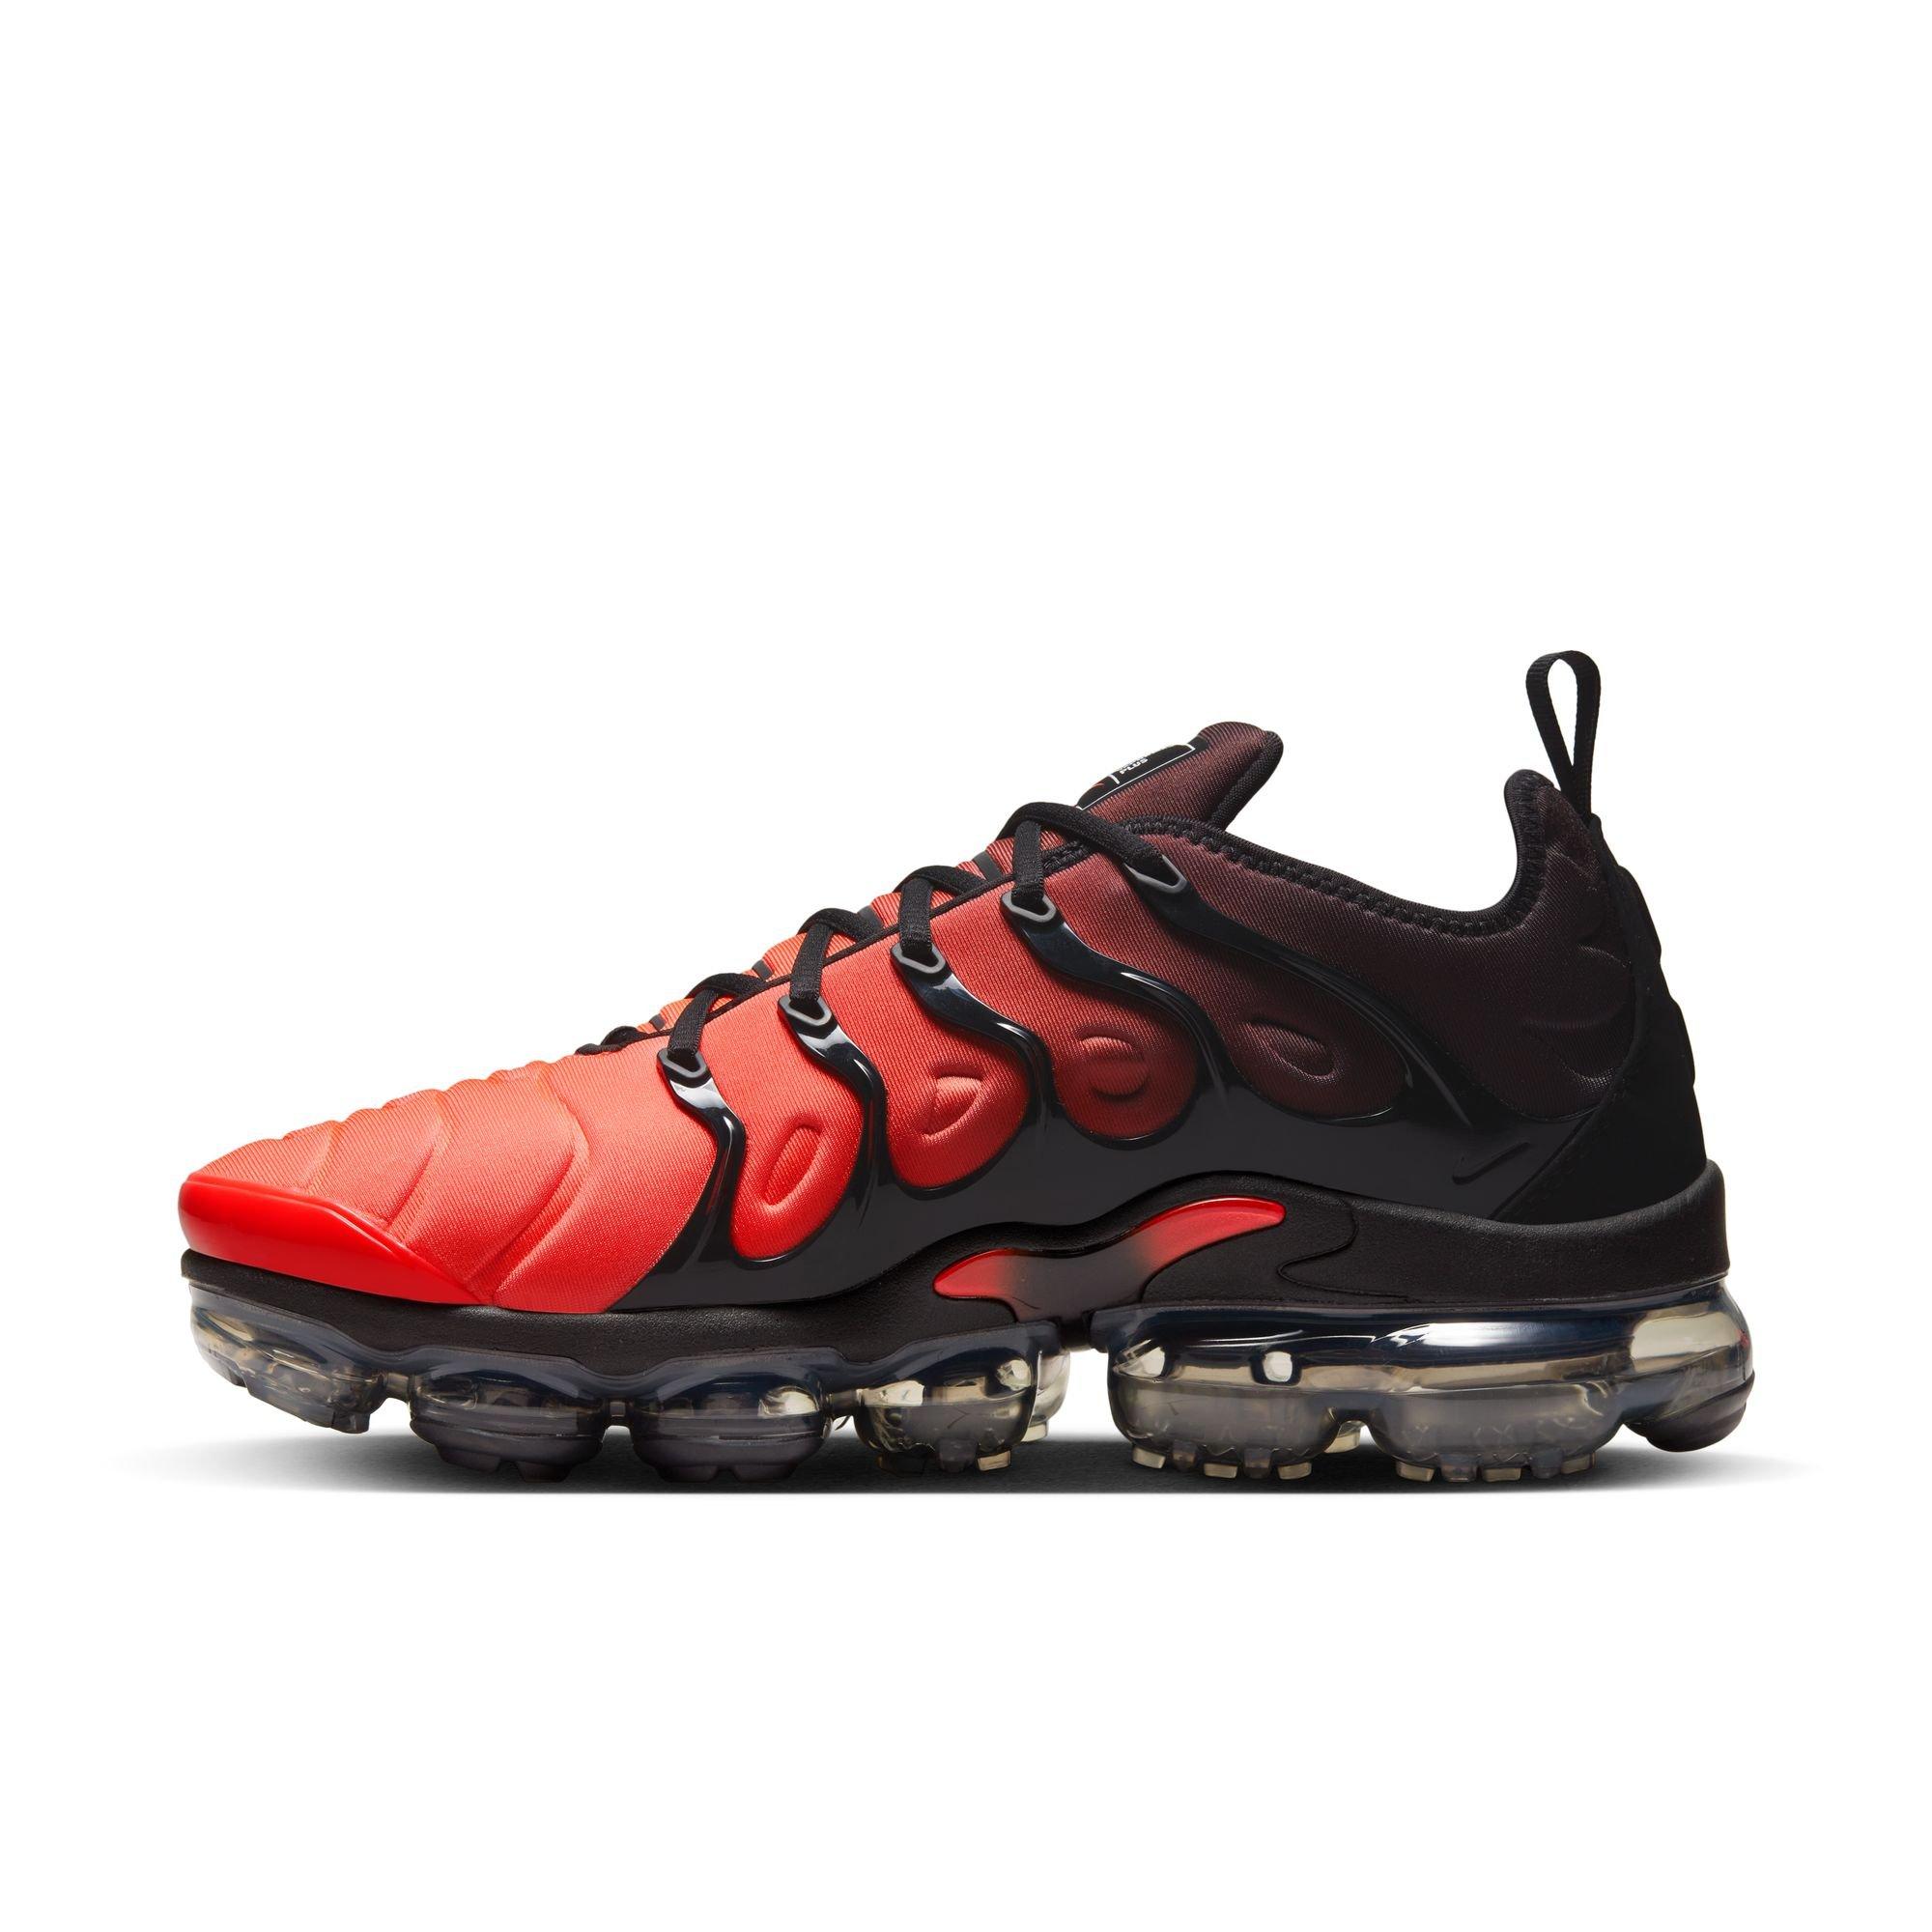 Nike Air VaporMax "Black/Bright Crimson/Anthracite/White" Men's Shoe